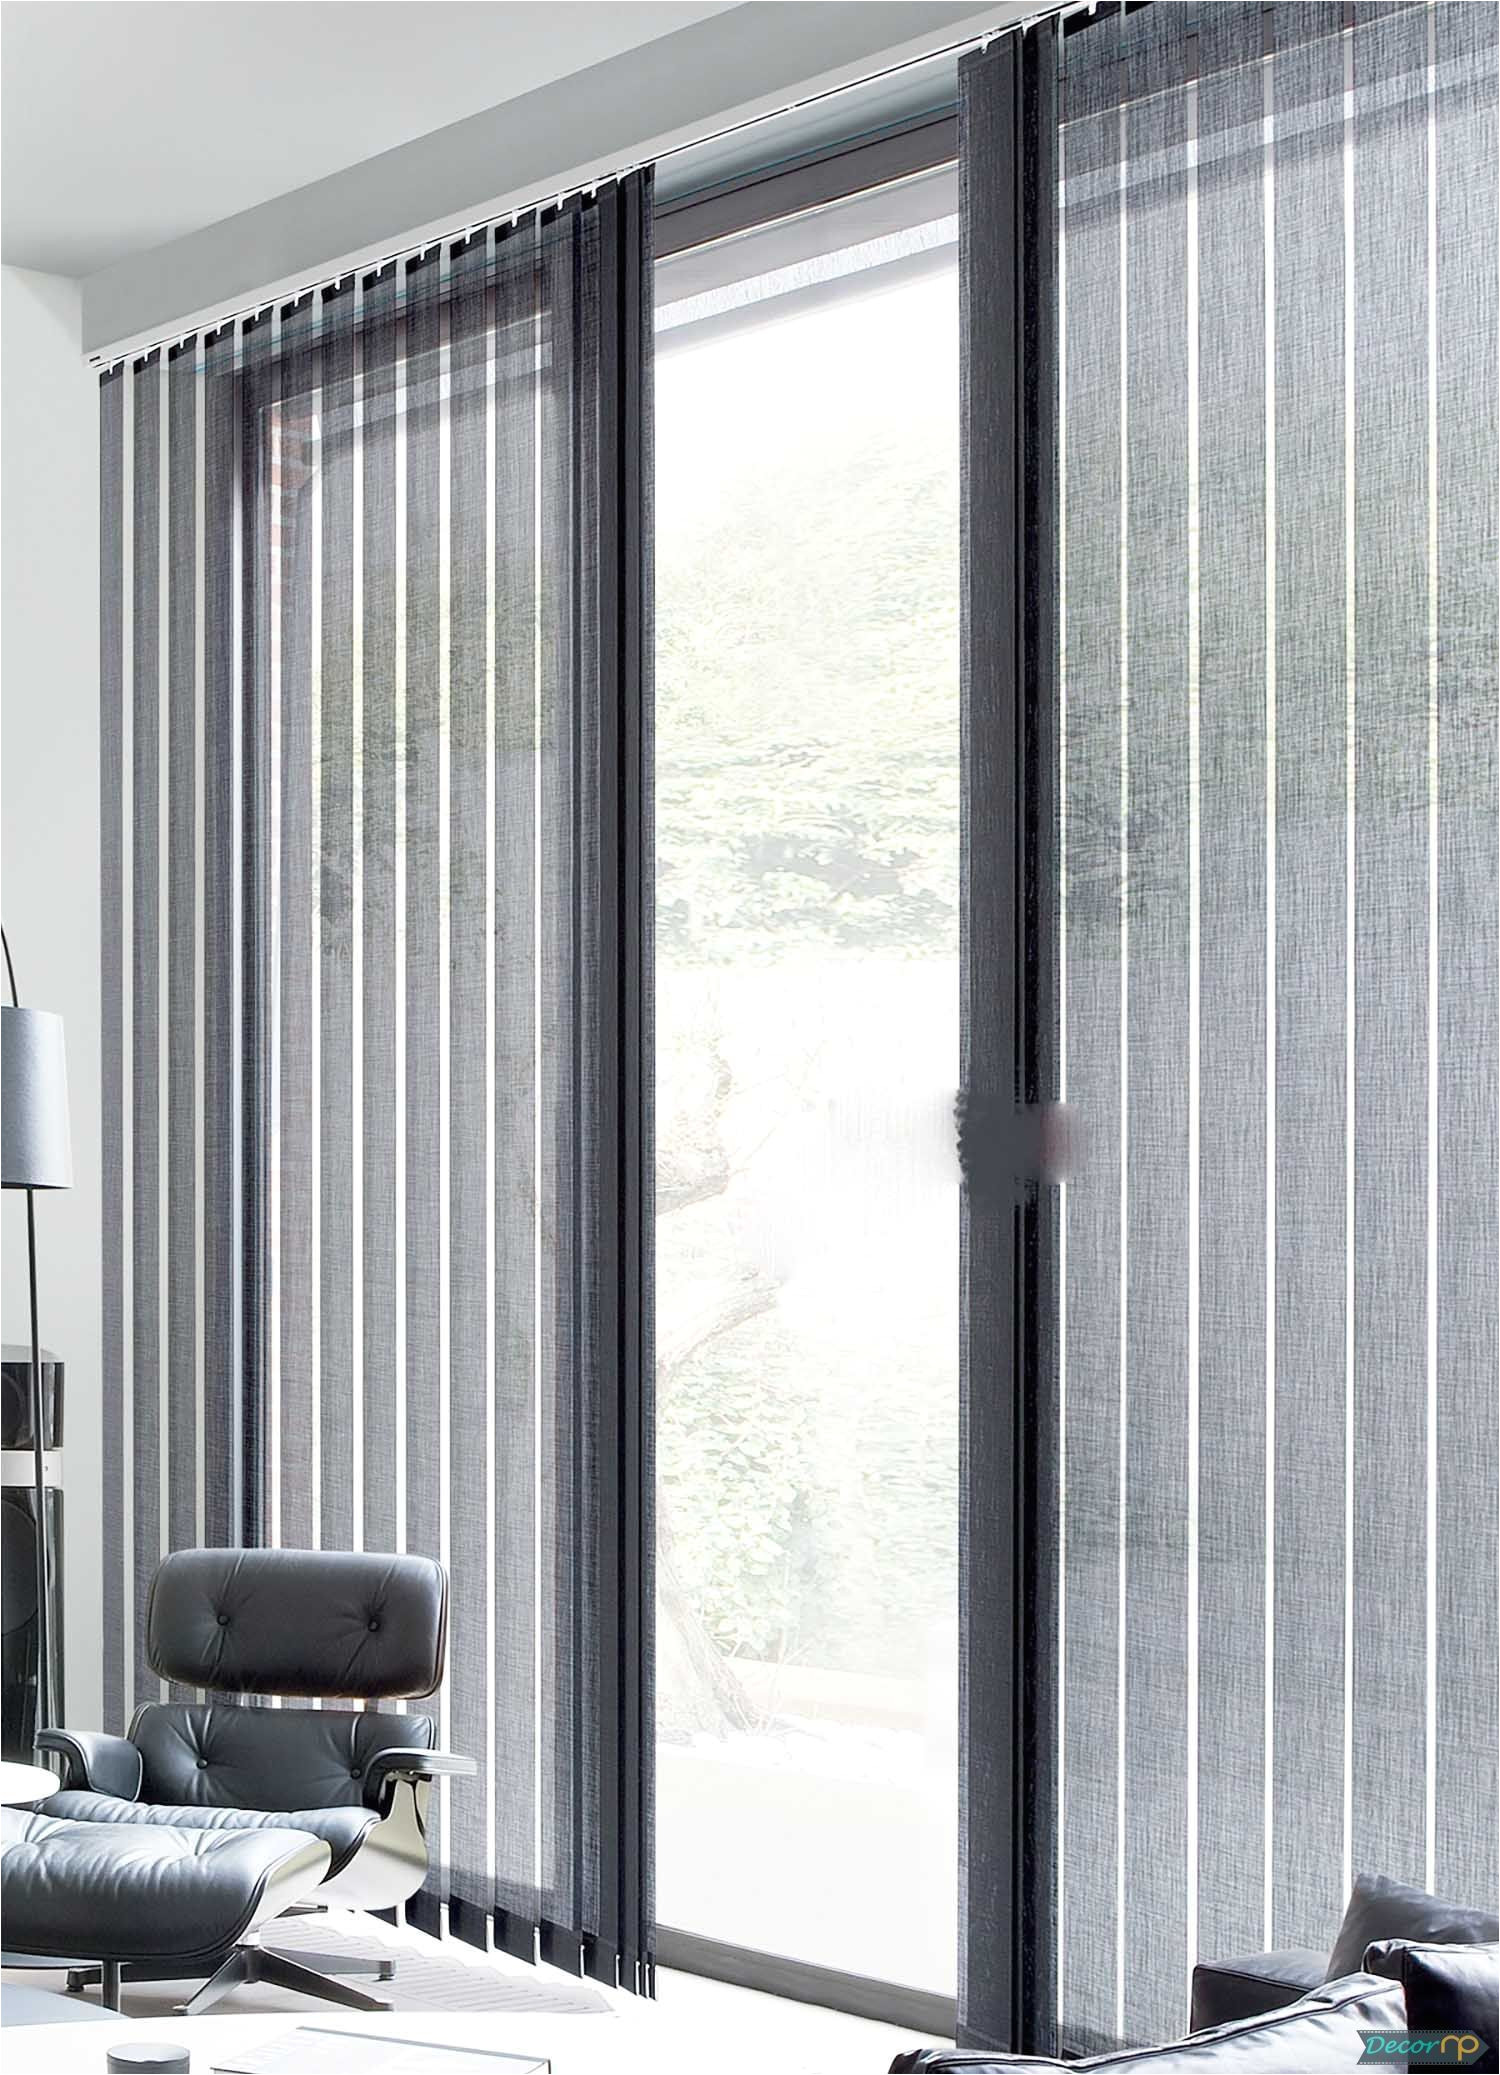 15 vertical modern blinds style in 2018 blinds2018 verticalblindscover verticalblindscolor